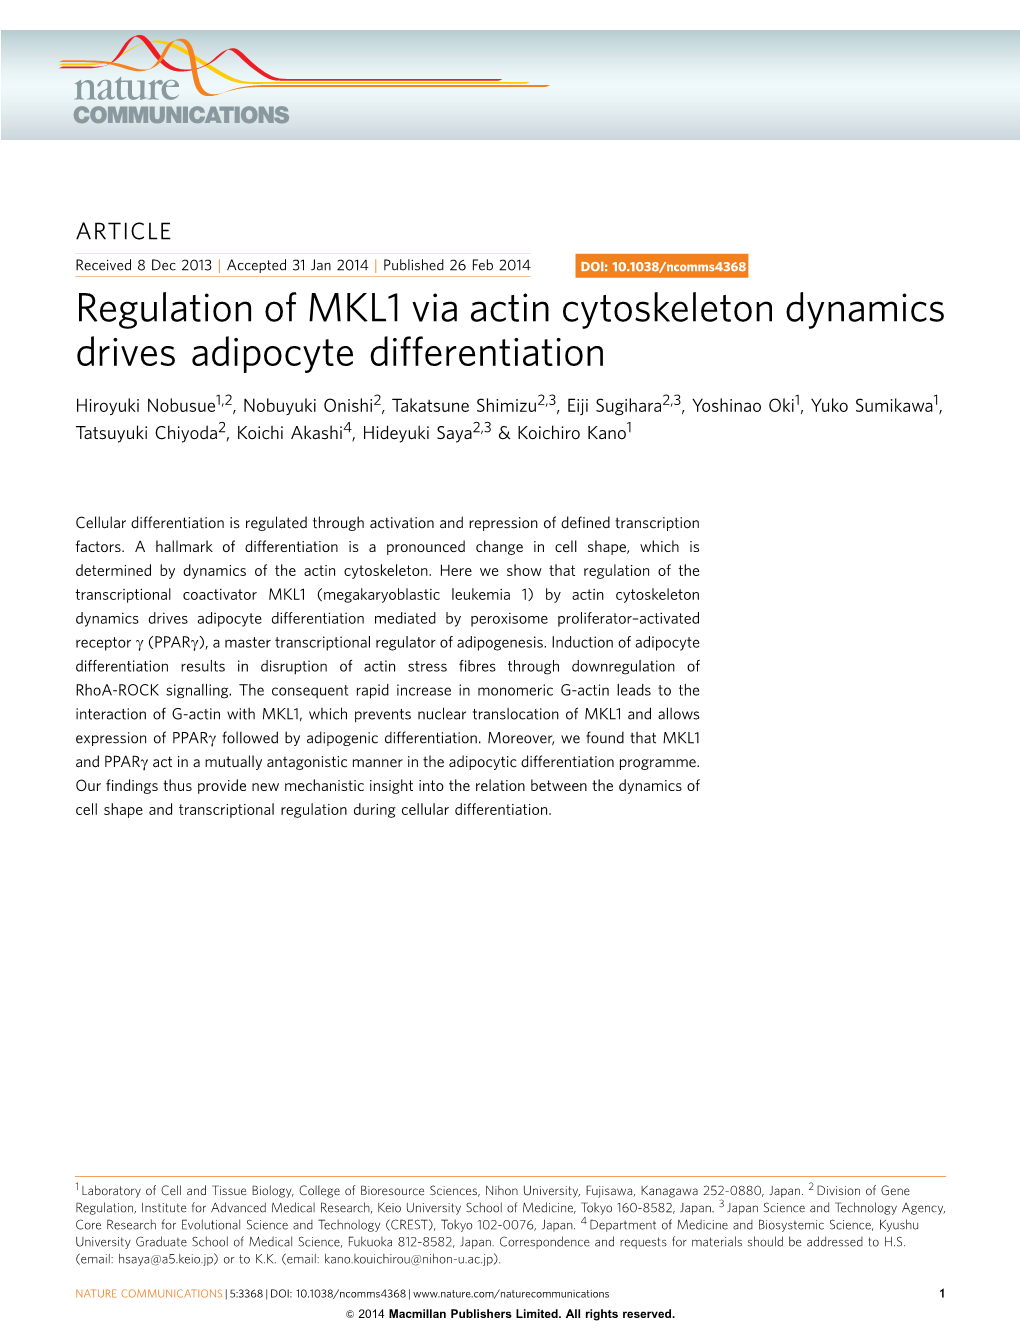 Regulation of MKL1 Via Actin Cytoskeleton Dynamics Drives Adipocyte Differentiation